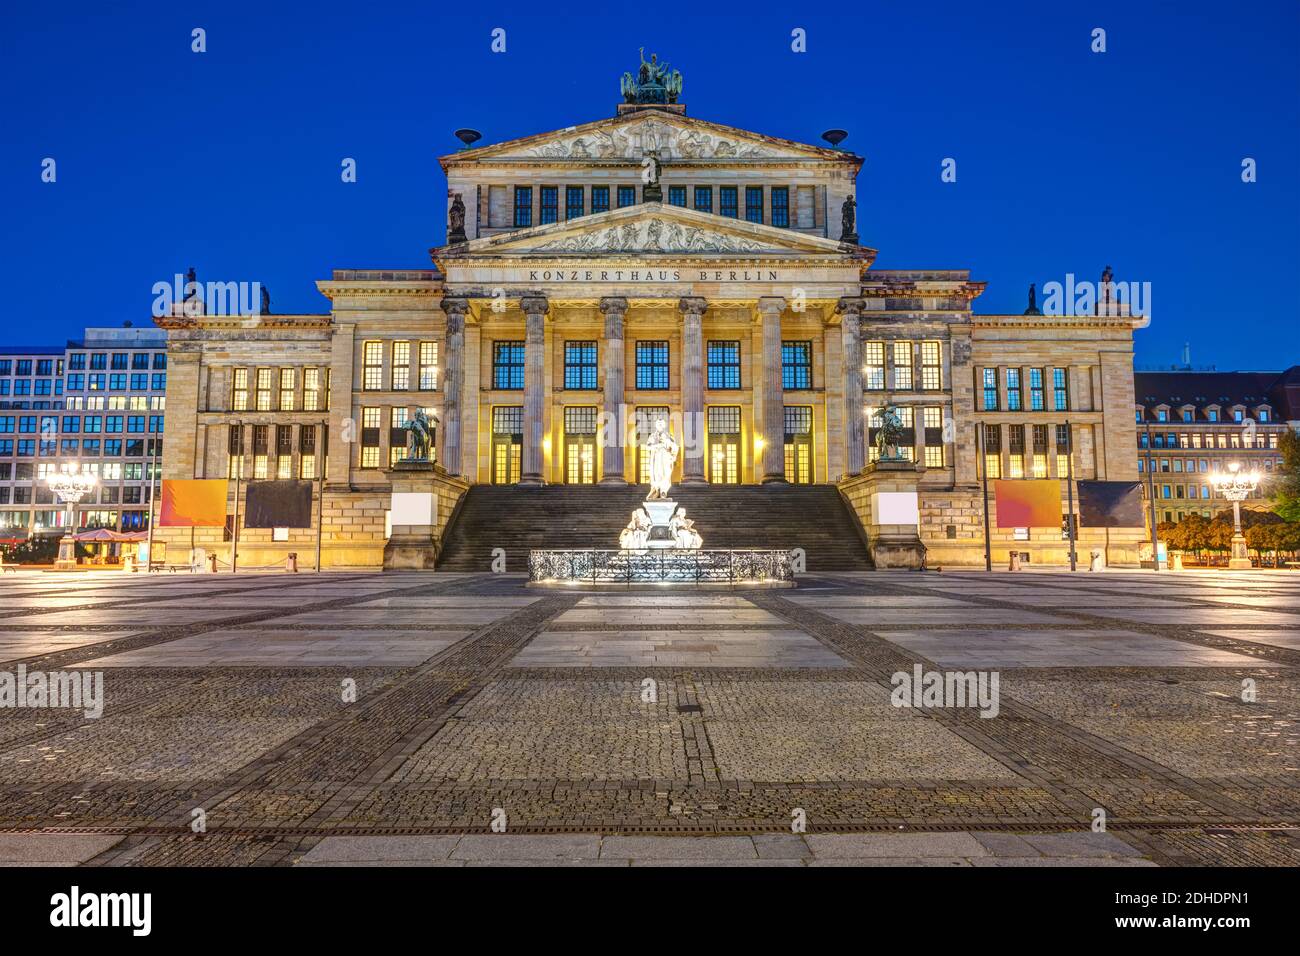 The Konzerthaus Berlin at the Gendarmenmarkt at night Stock Photo